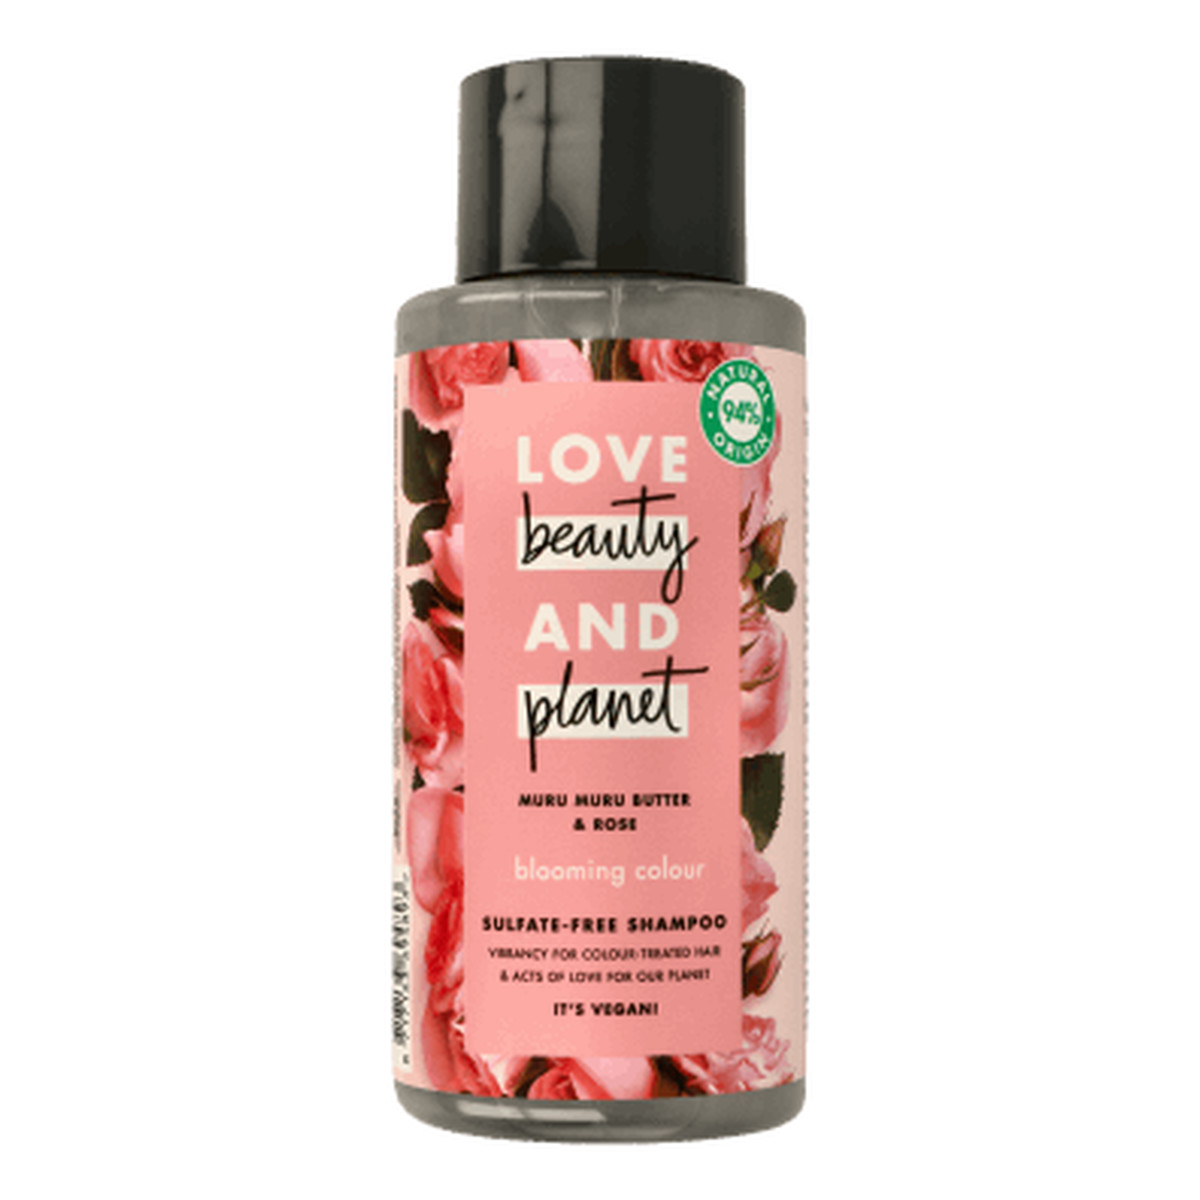 Love Beauty and Planet Muru Muru Butter & Rose Blooming Colour Shampoo szampon do włosów farbowanych 400ml